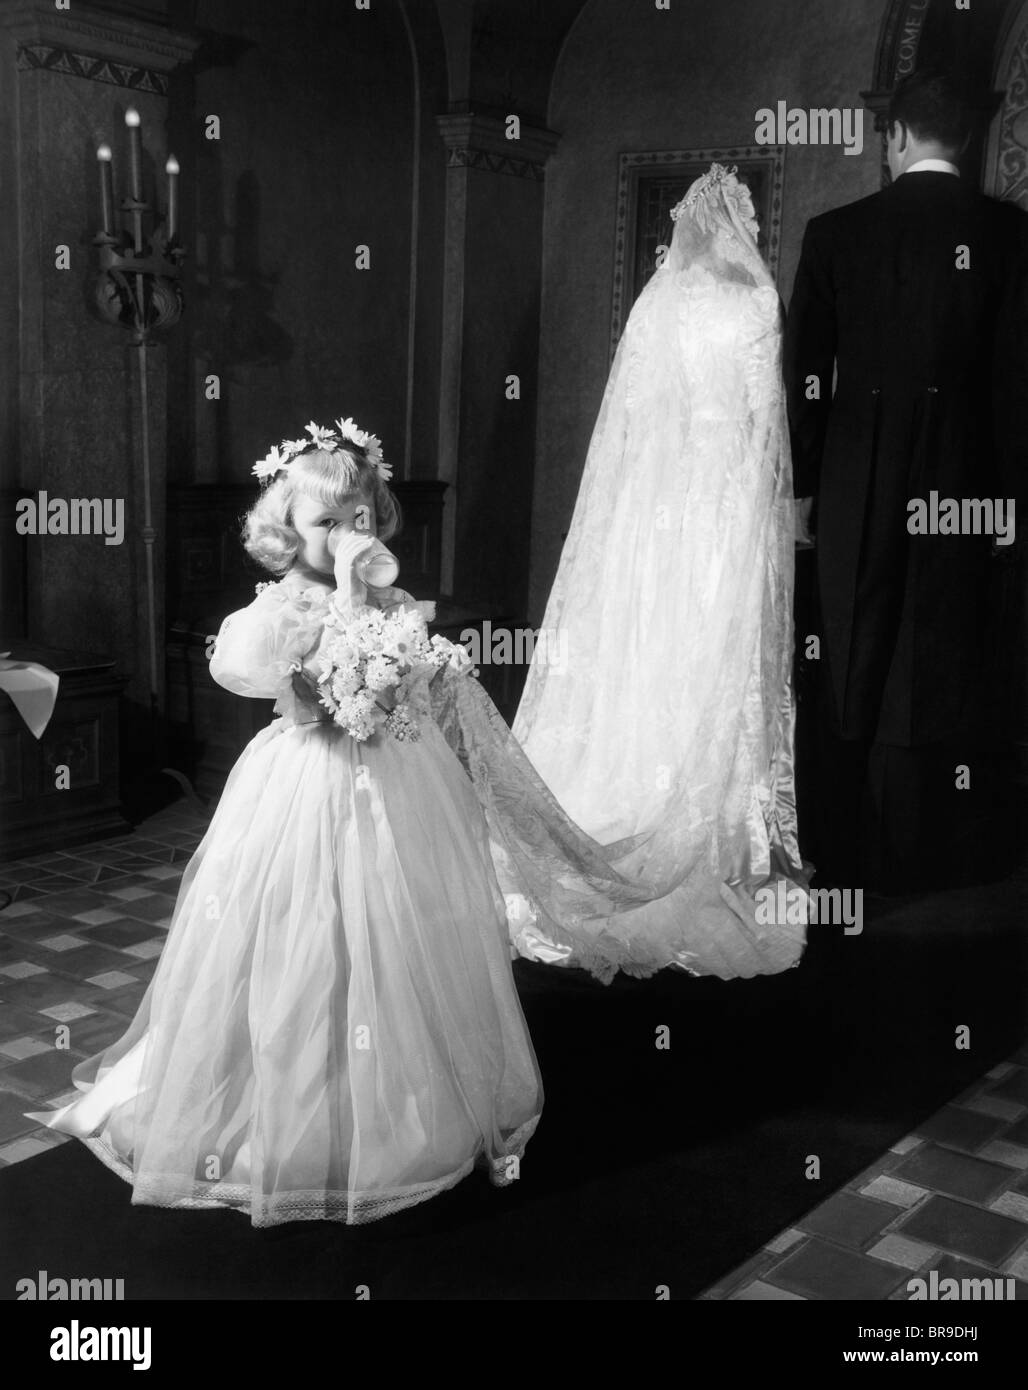 1950s LITTLE GIRL BRIDESMAID DRINKING GLASS OF MILK HOLDING BRIDAL VEIL TRAIN WALKING DOWN CHURCH AISLE LOOKING AT CAMERA Stock Photo